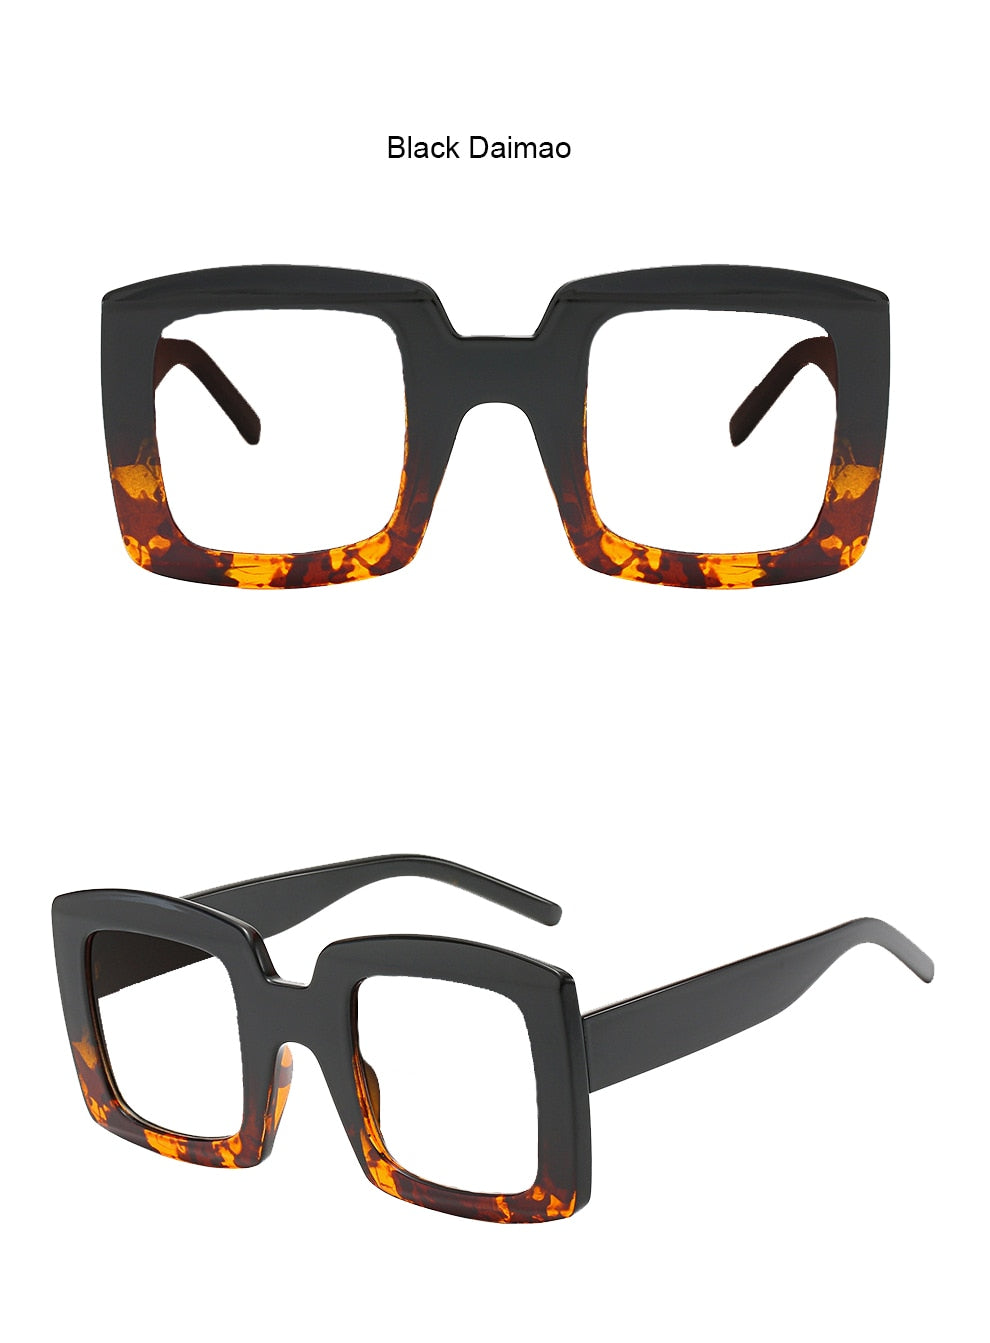 TEEK - Wide Square Reading Glasses | Prescribed or Zero Strength EYEGLASSES theteekdotcom black daimao clear 0 